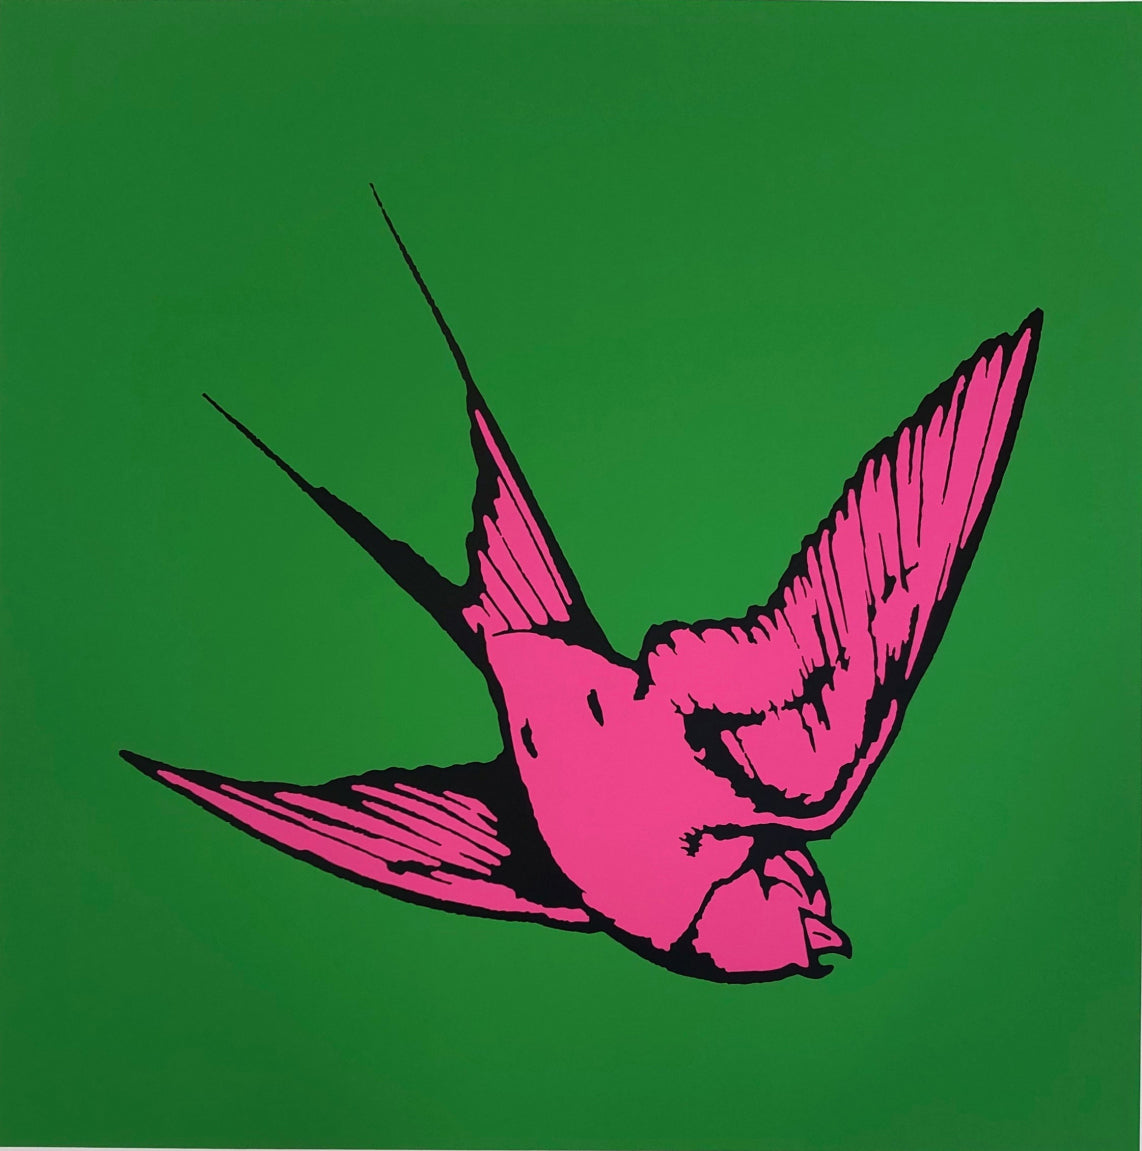 Dan Baldwin limited edition print of Pink Hummingbird on a green background